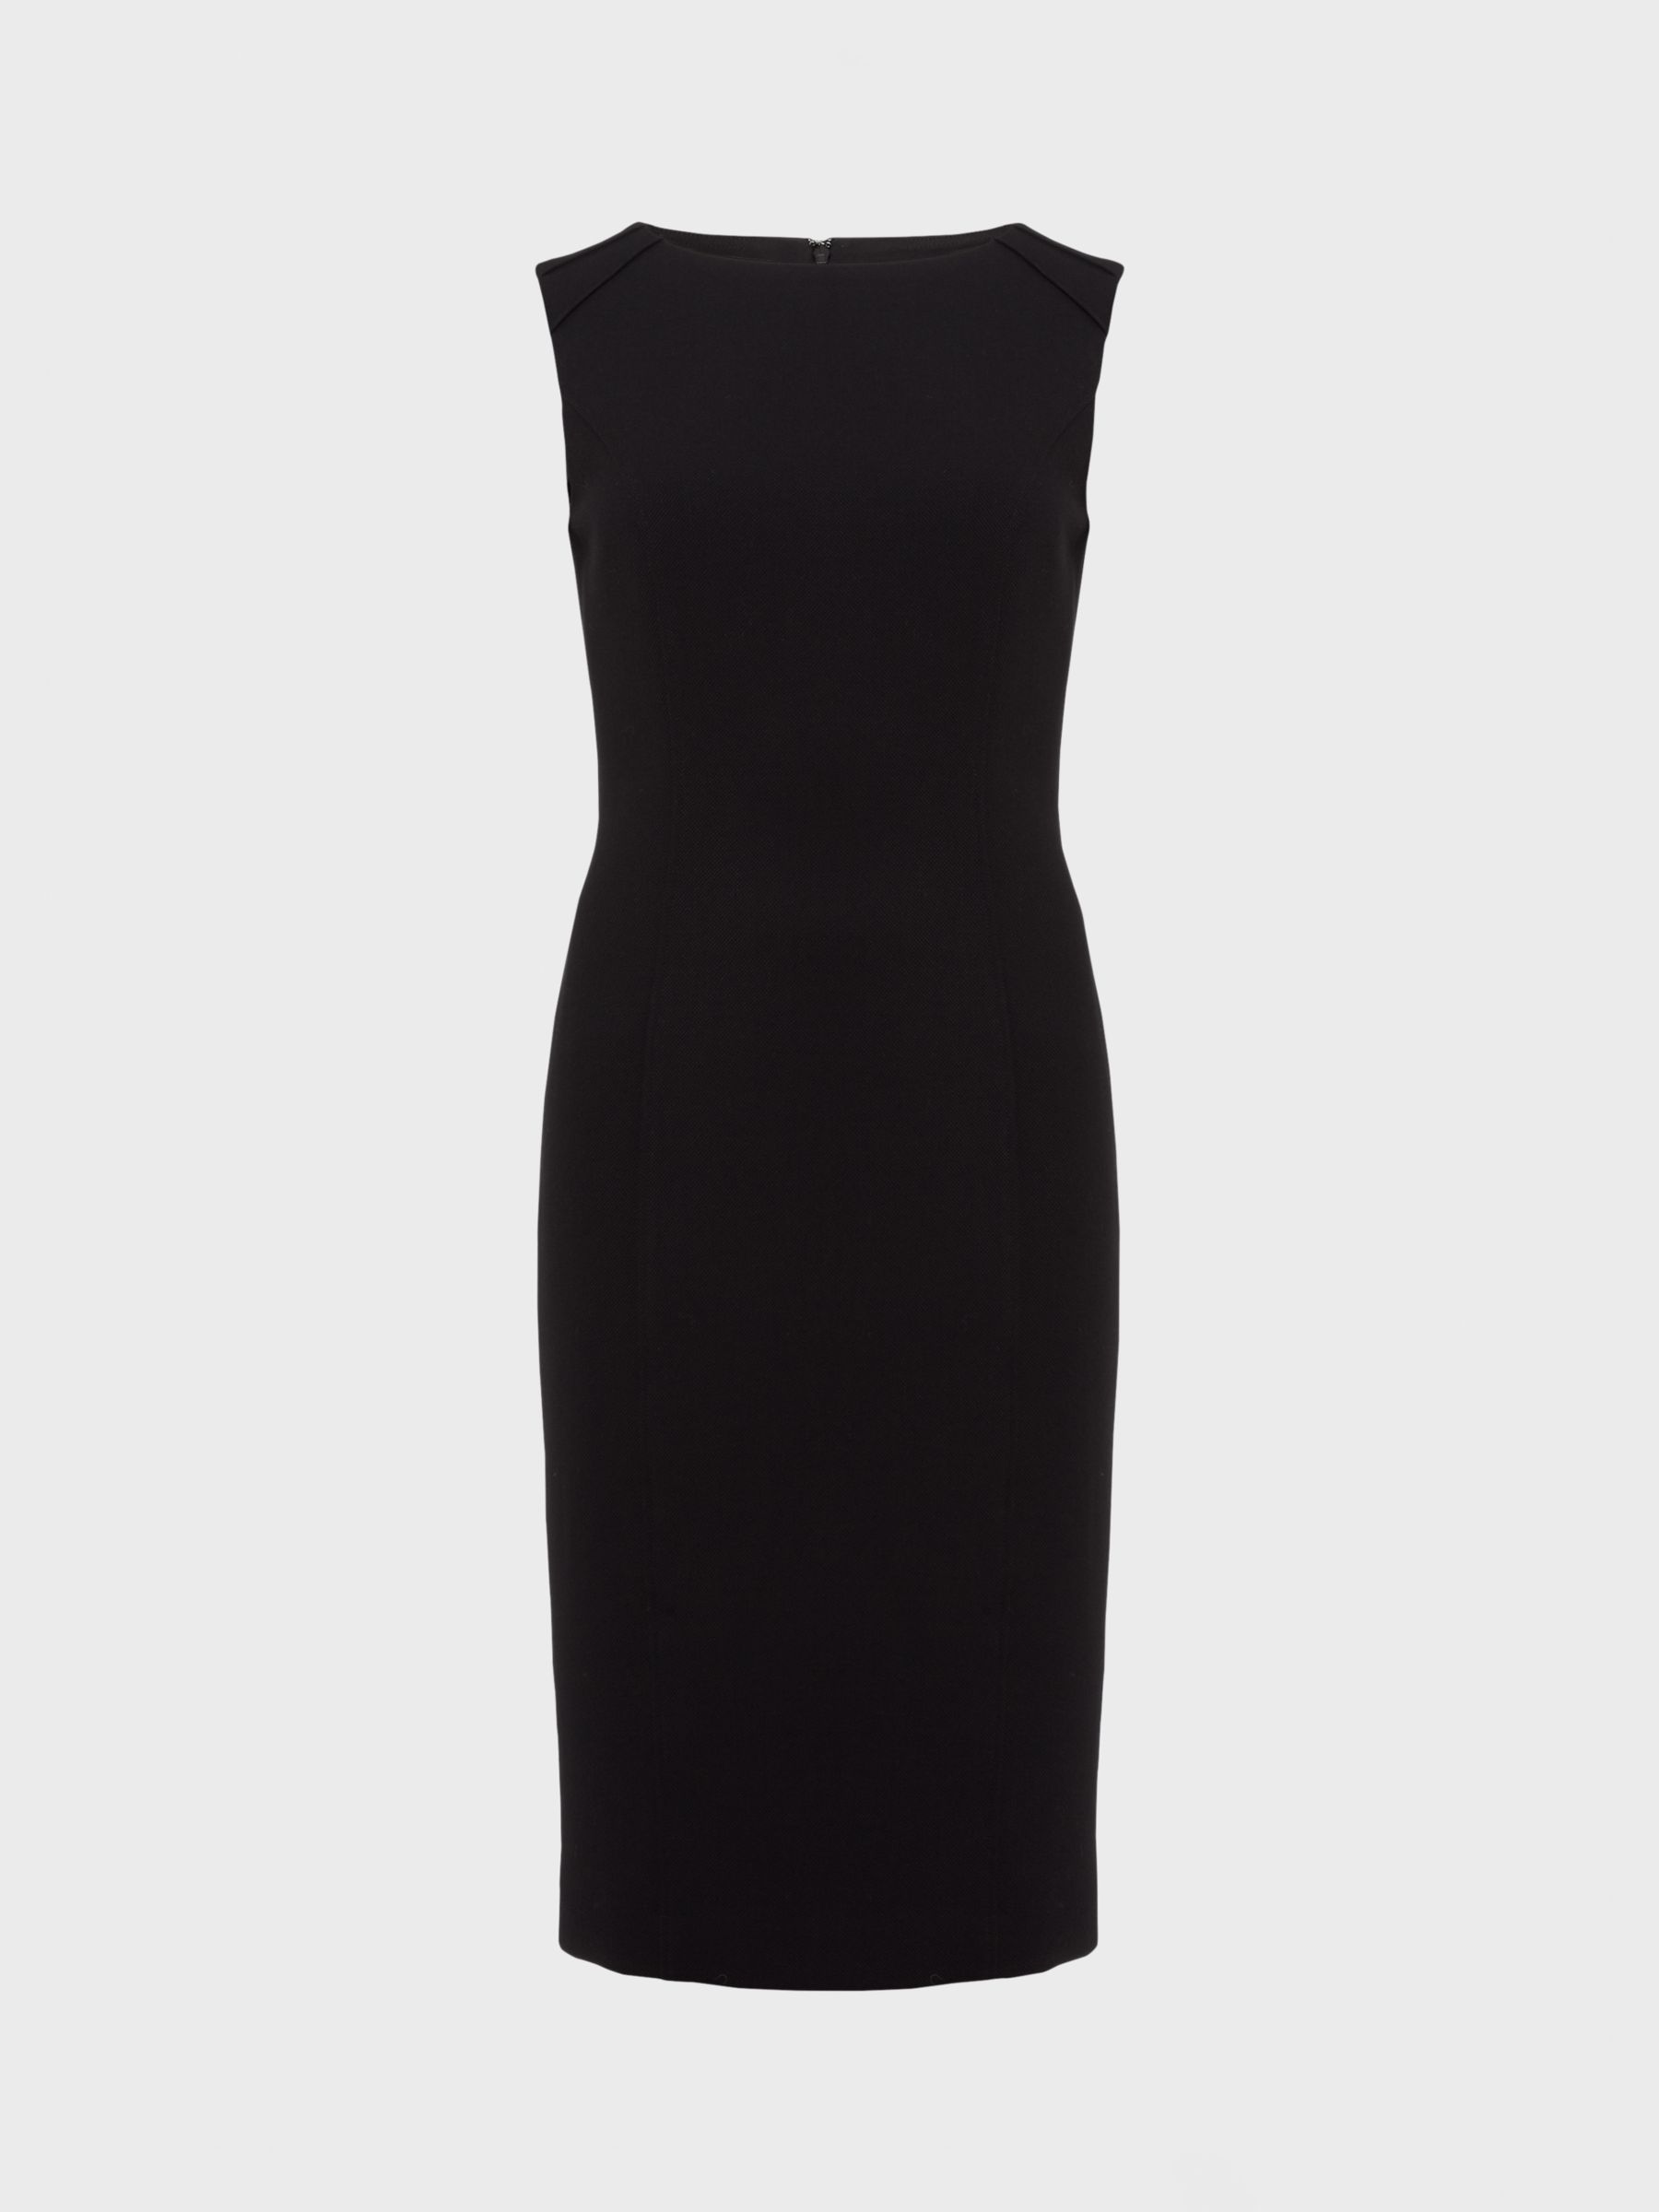 Hobbs Petite Charley Pencil Dress, Black at John Lewis & Partners